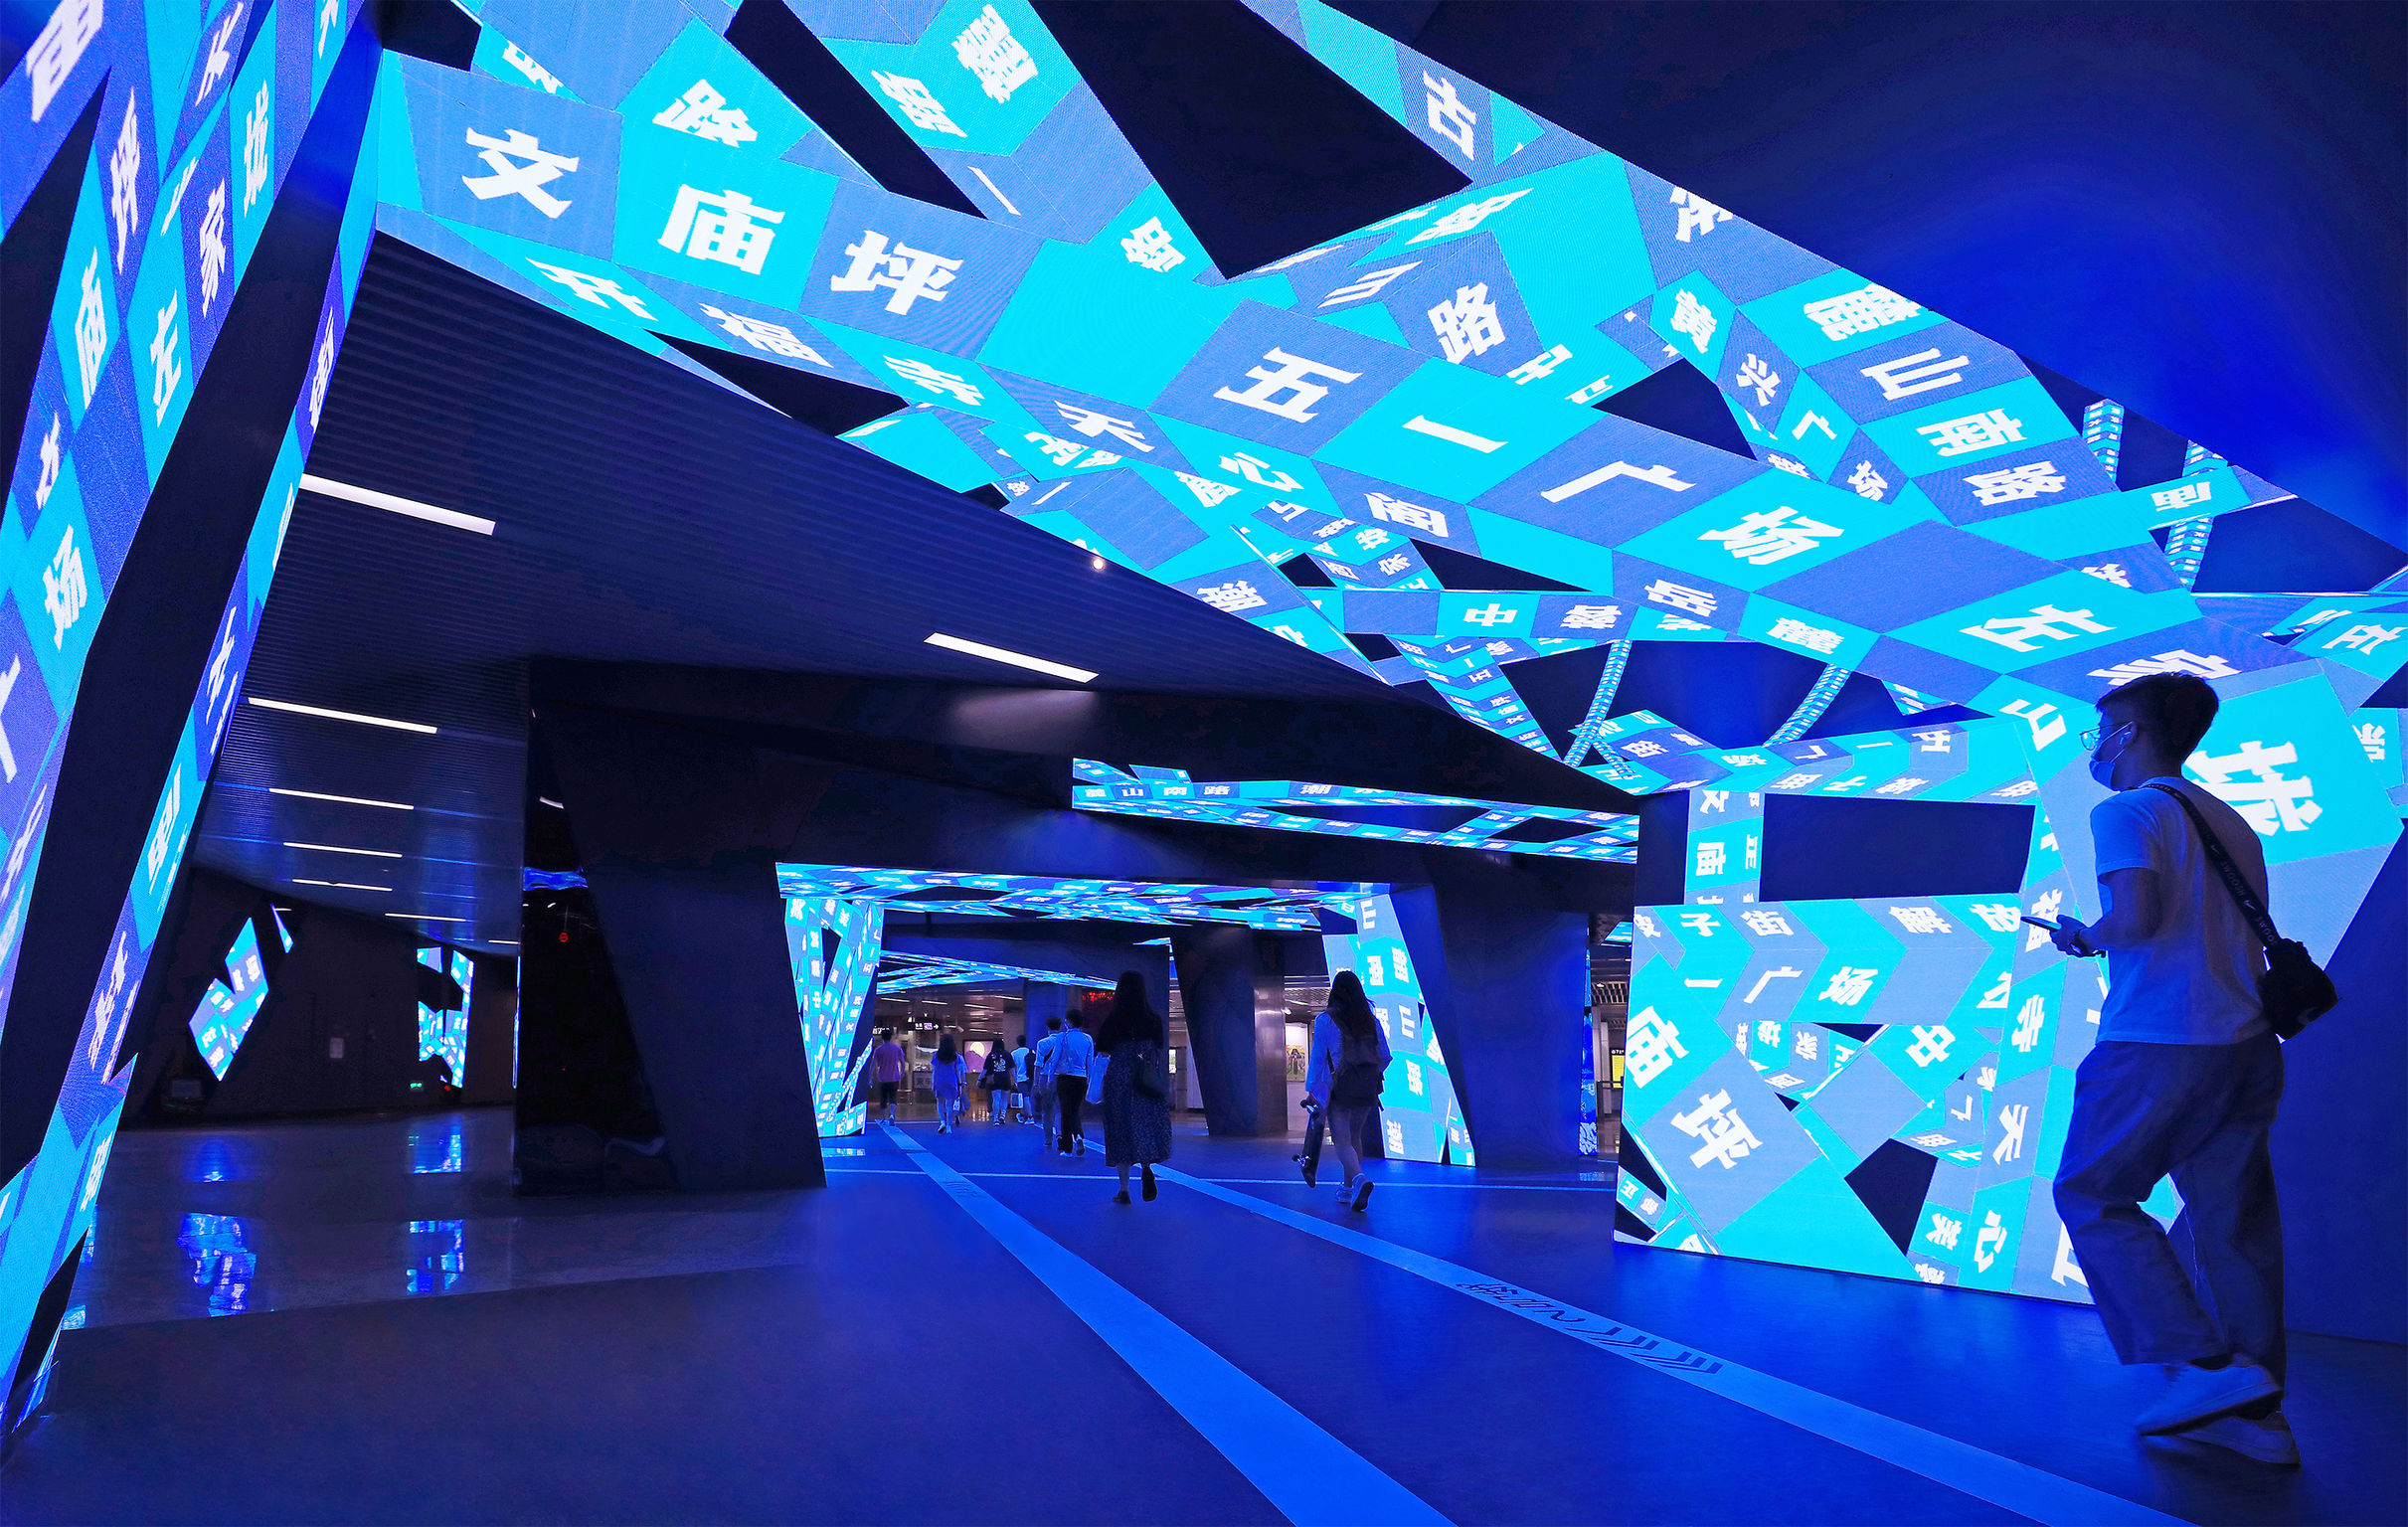 Changsha Subway Digital Art Museum